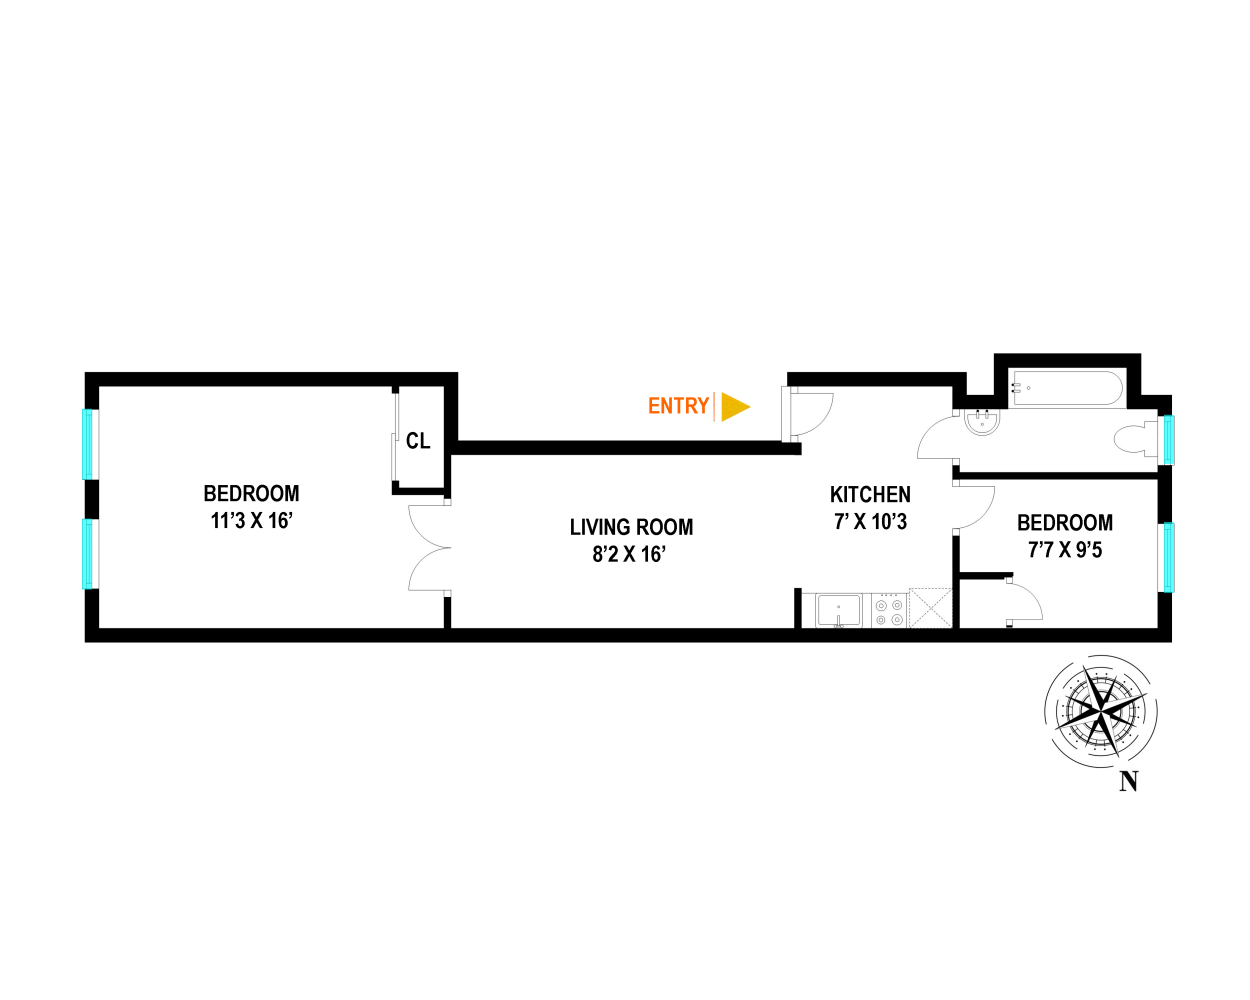 Floorplan for 206 Ave B, 1